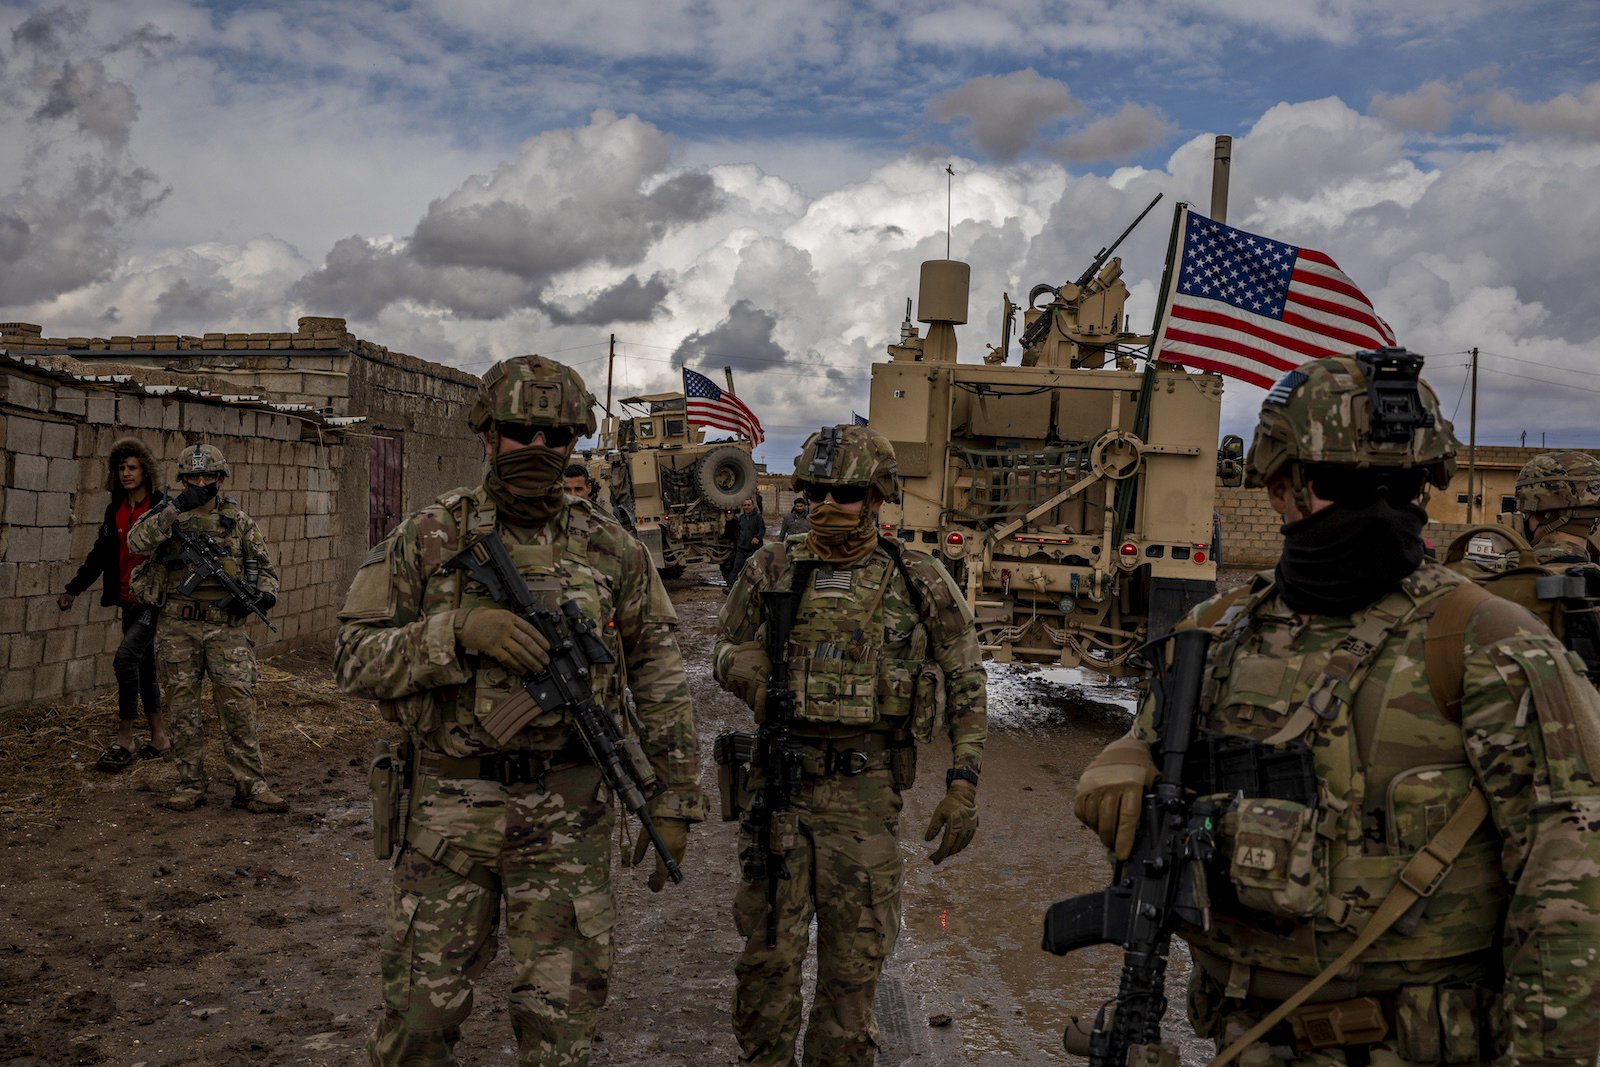 U.S. soldiers patrolling Syria